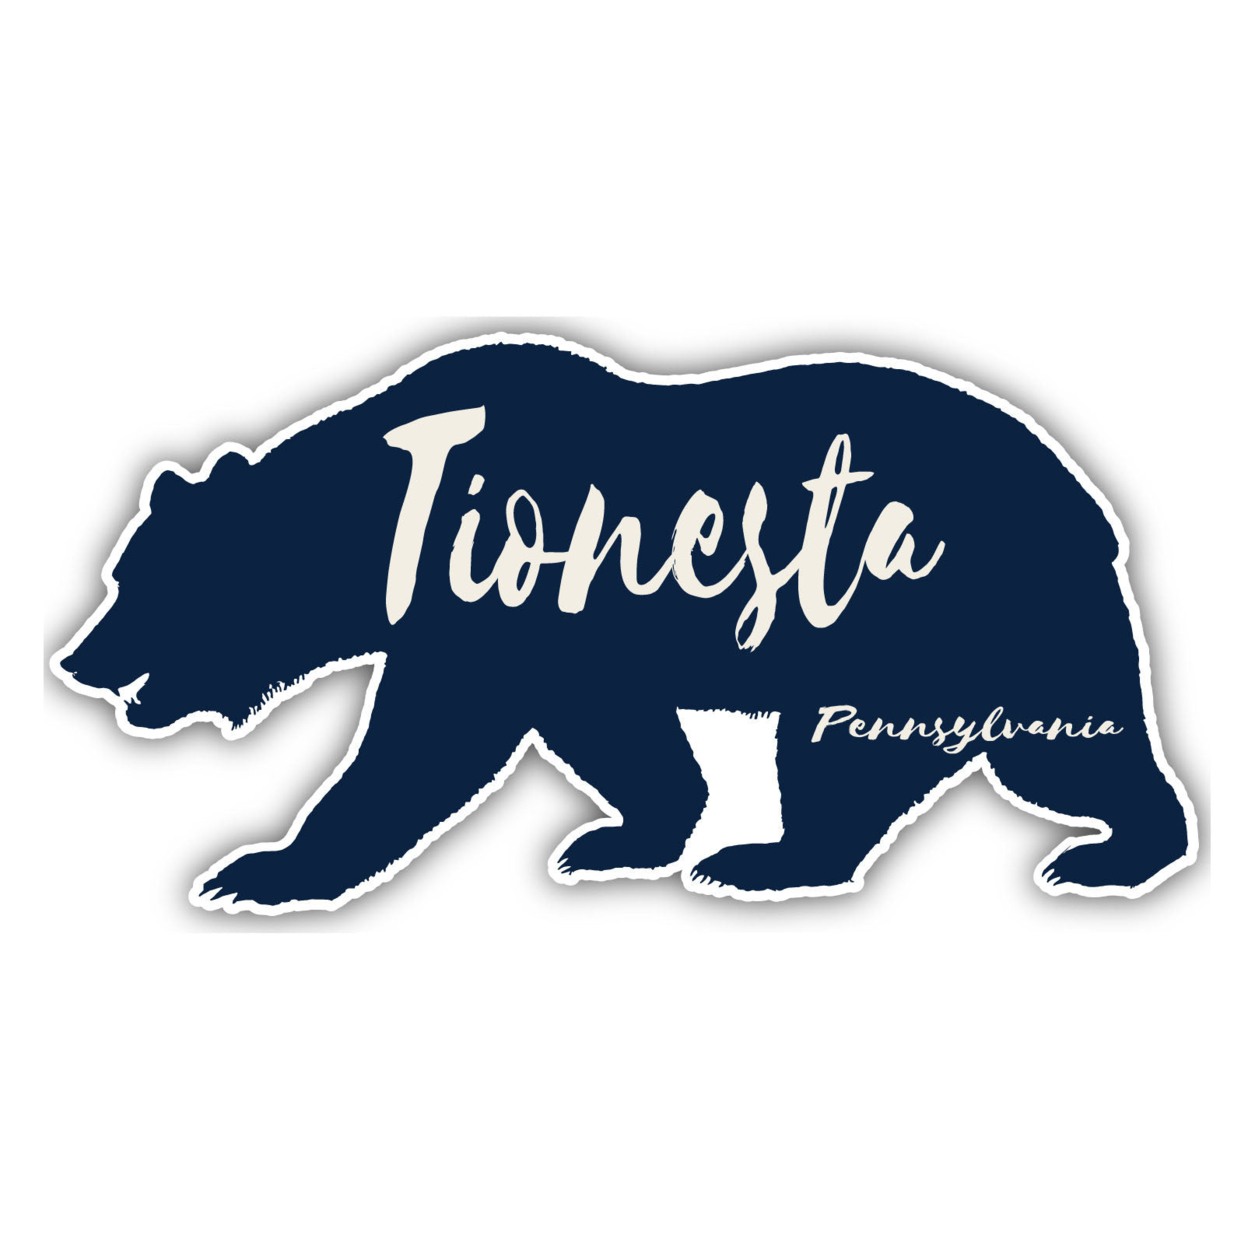 Tionesta Pennsylvania Souvenir Decorative Stickers (Choose Theme And Size) - Single Unit, 2-Inch, Tent